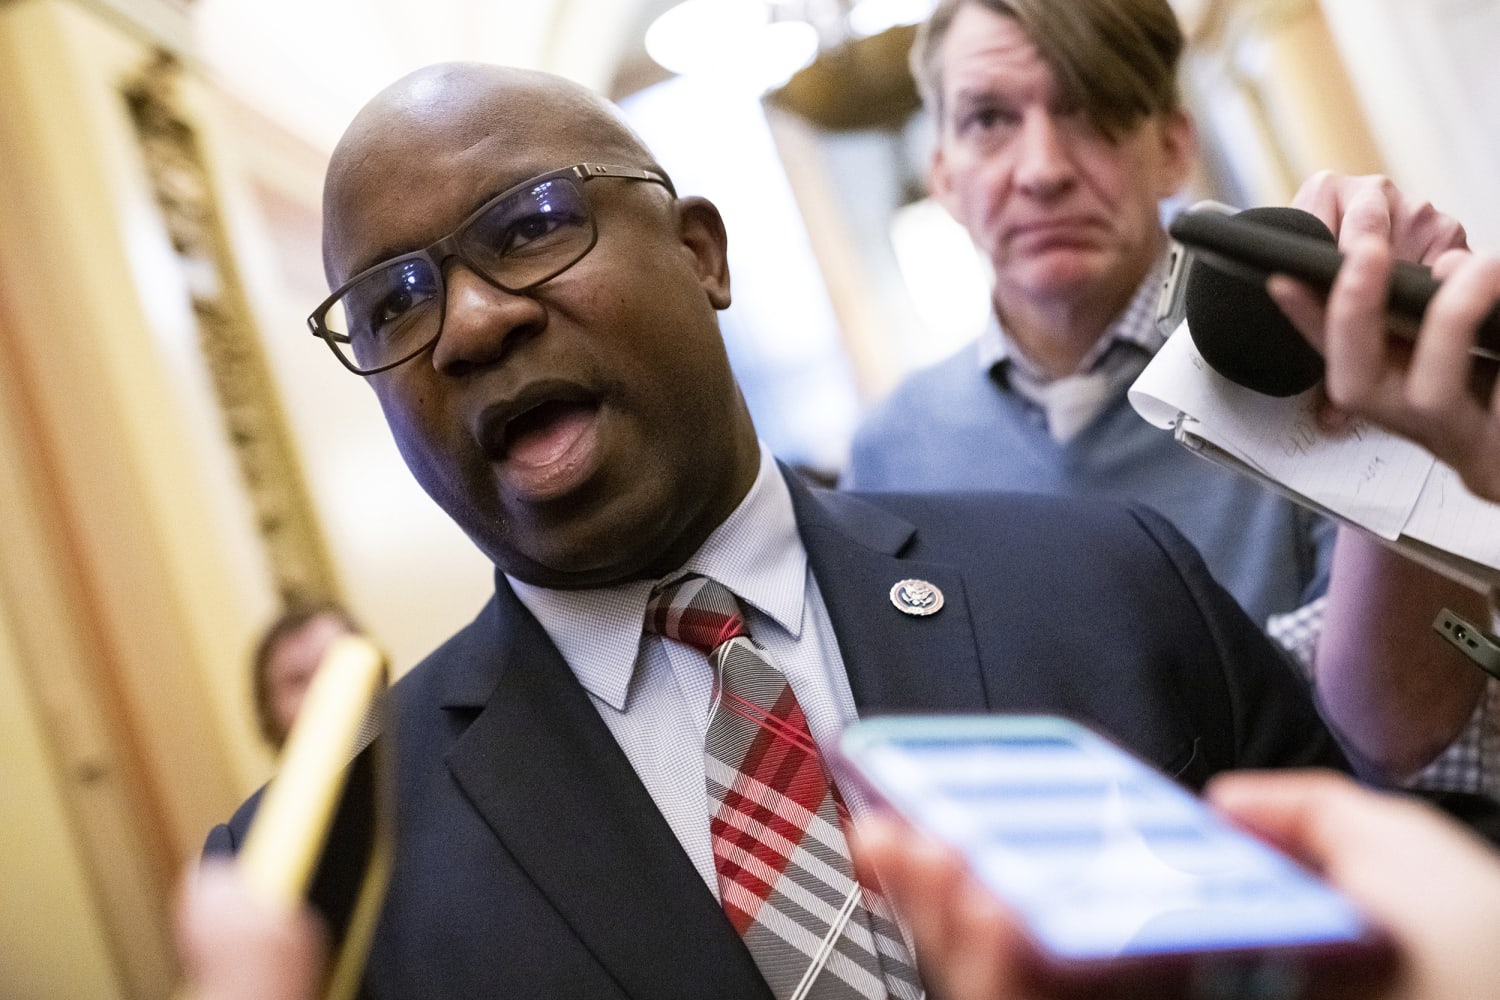 House Democrat calls Republicans ‘cowards’ in tense exchange over gun violence